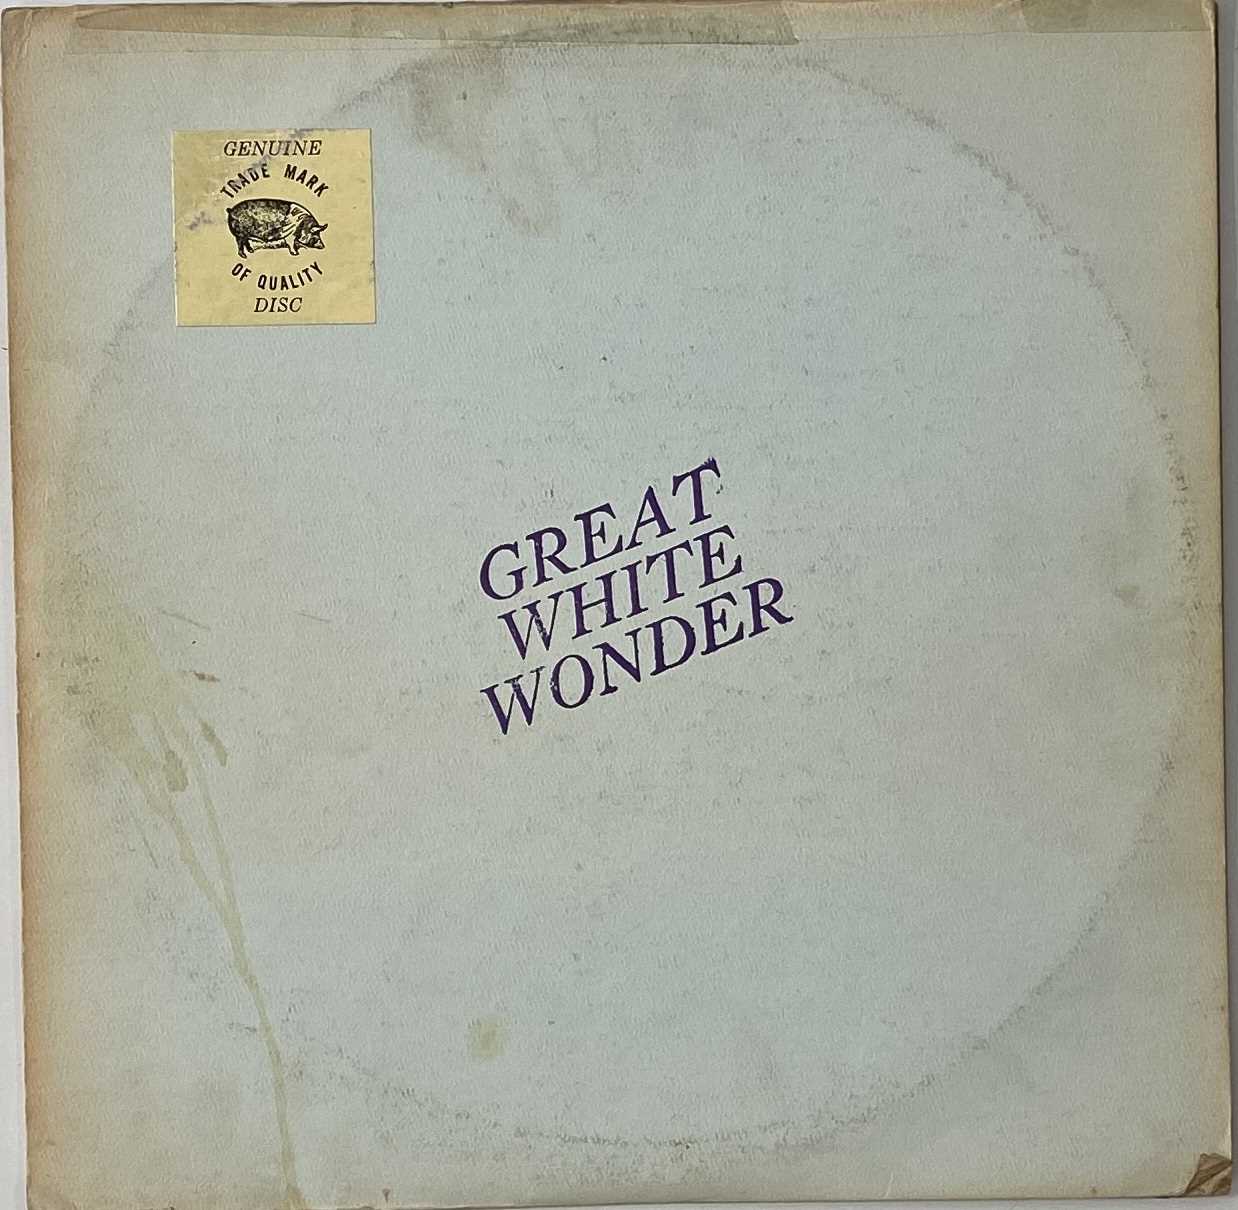 BOB DYLAN - GREAT WHITE WONDER 2 LP (US COLOURED VINYL) - Image 2 of 5